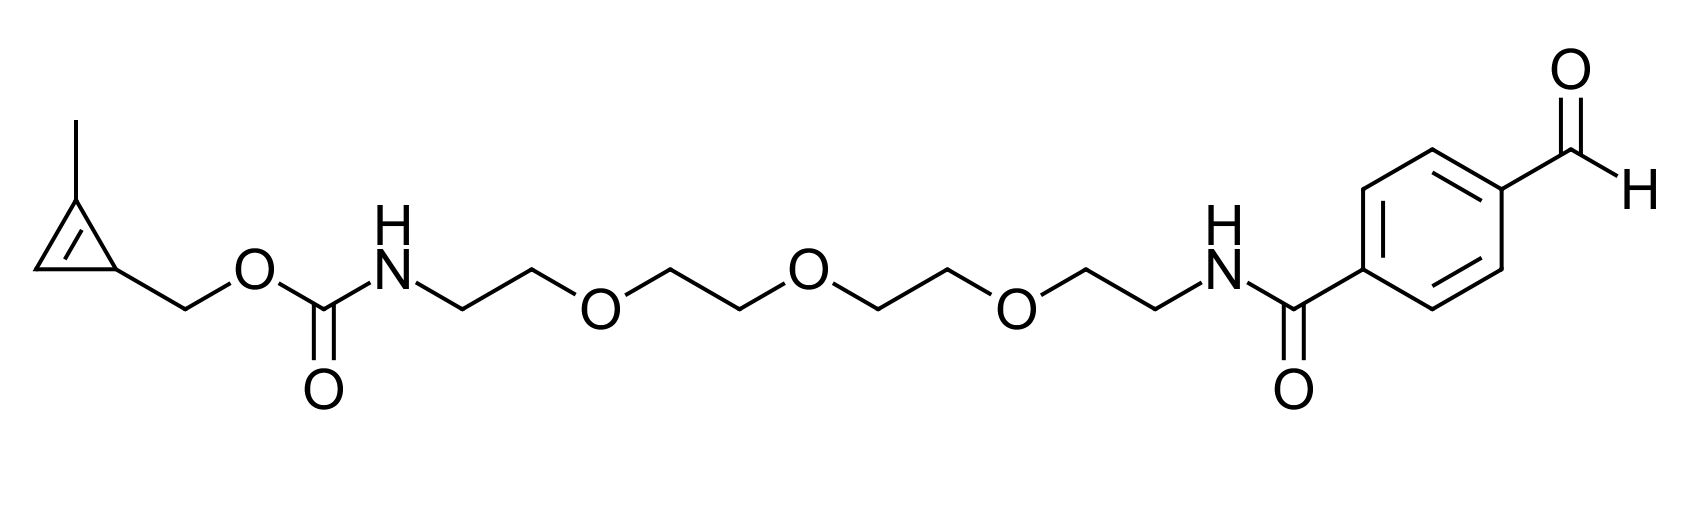 Methylcyclopropene-PEG3-aldehyde - Conju-Probe: Enable Bioconjugation